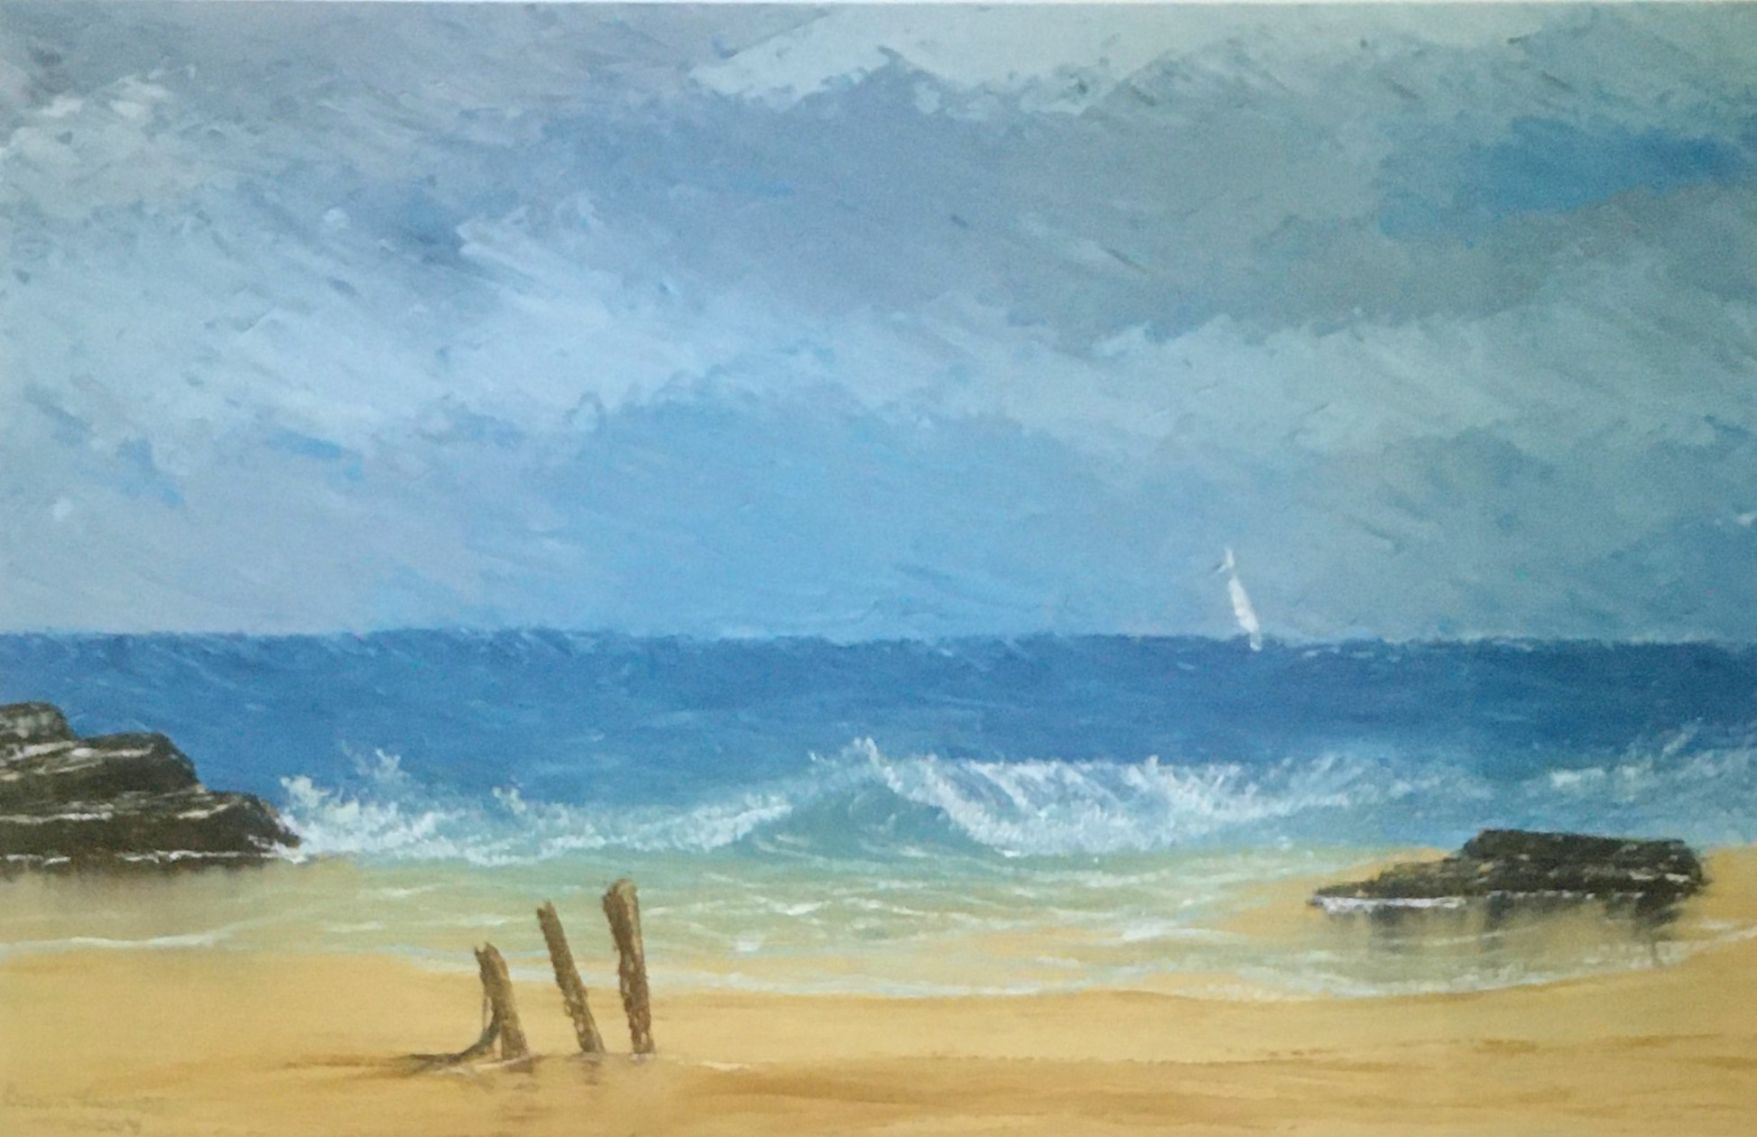 Oil on canvas board
18" x 12" (2007)